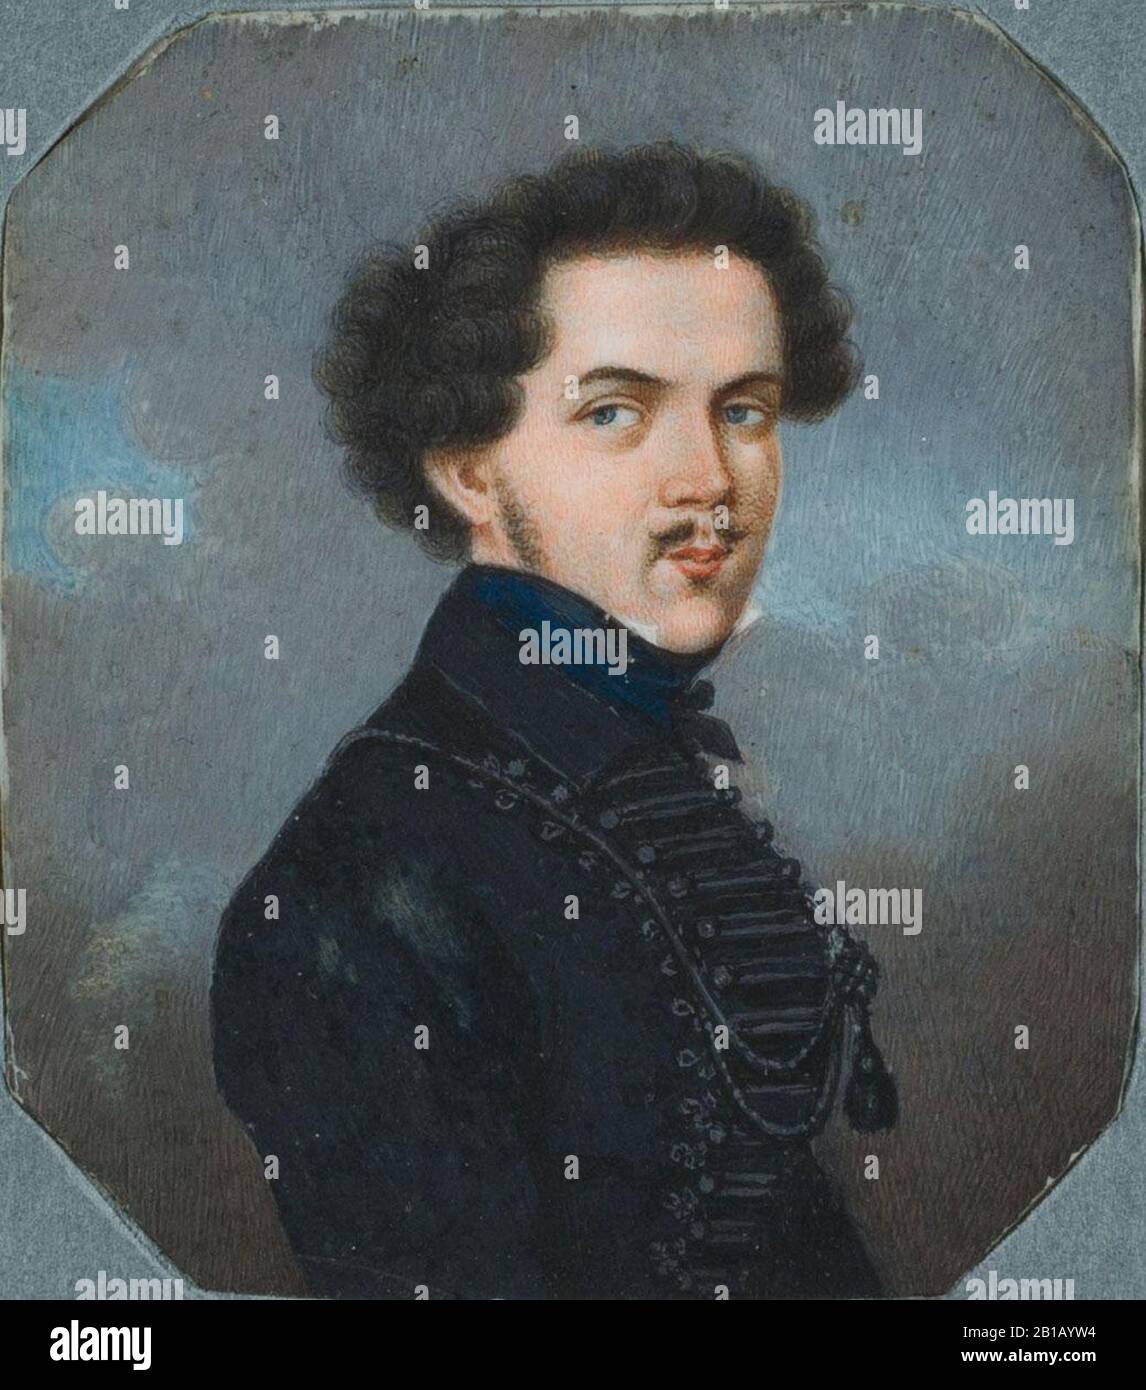 Friedrich Hahn (c. 1805-1881), Self-portrait, c. 1820, Watercolor. Stock Photo